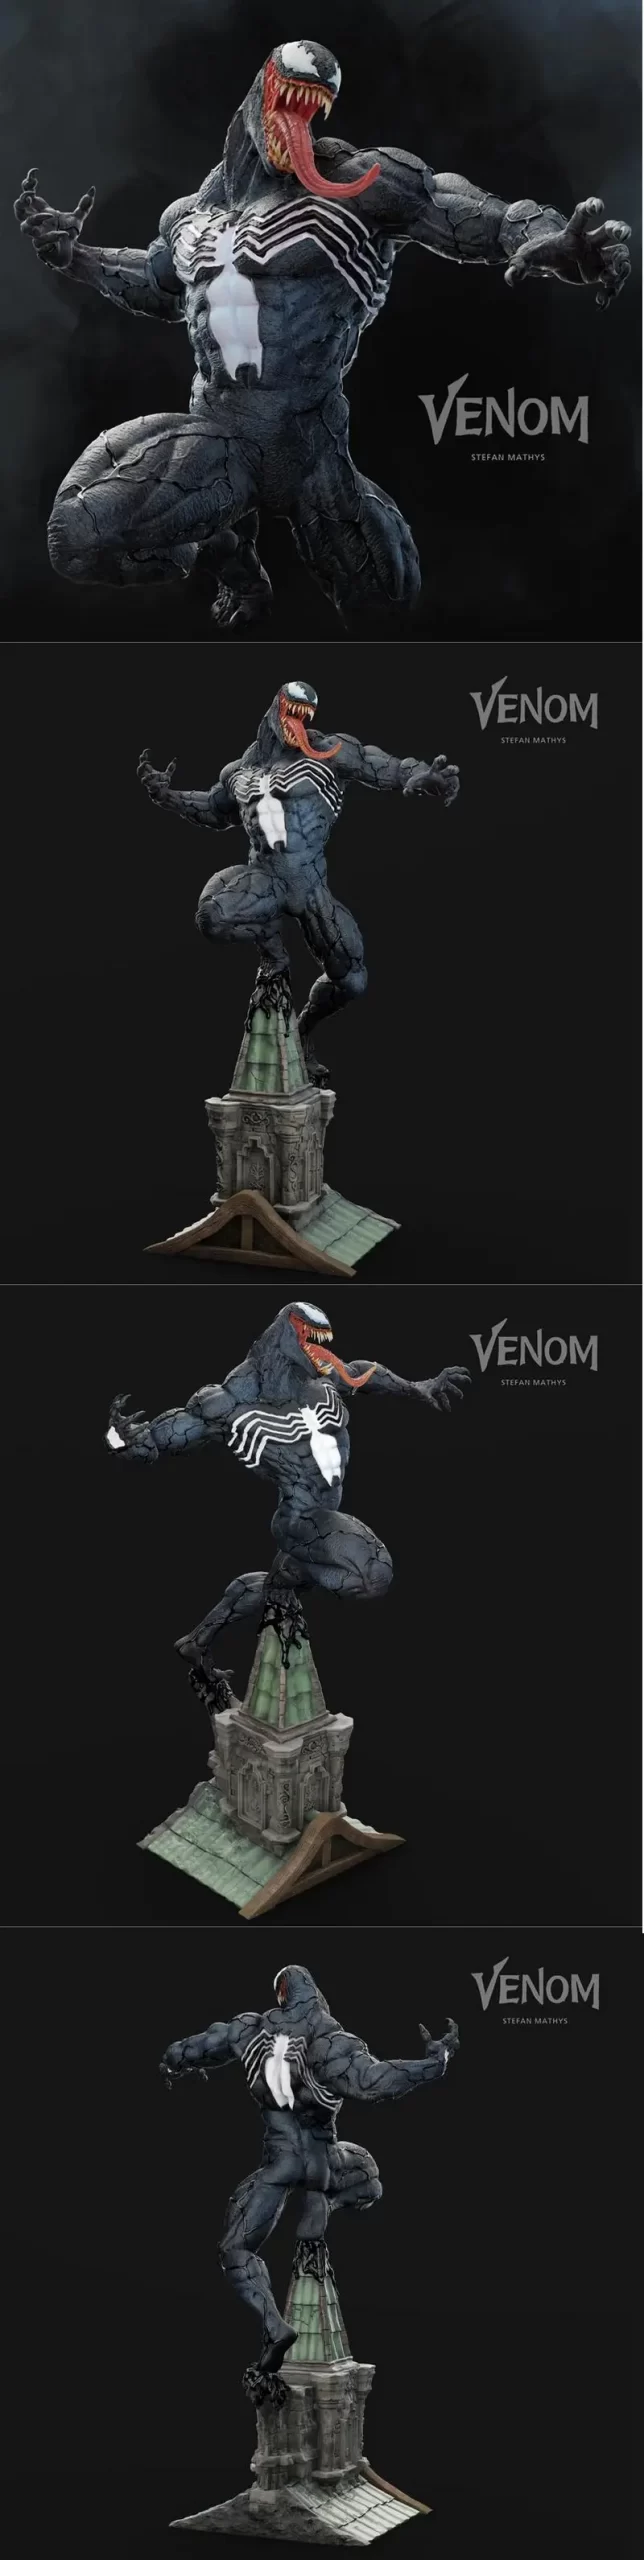 Venom on Tower